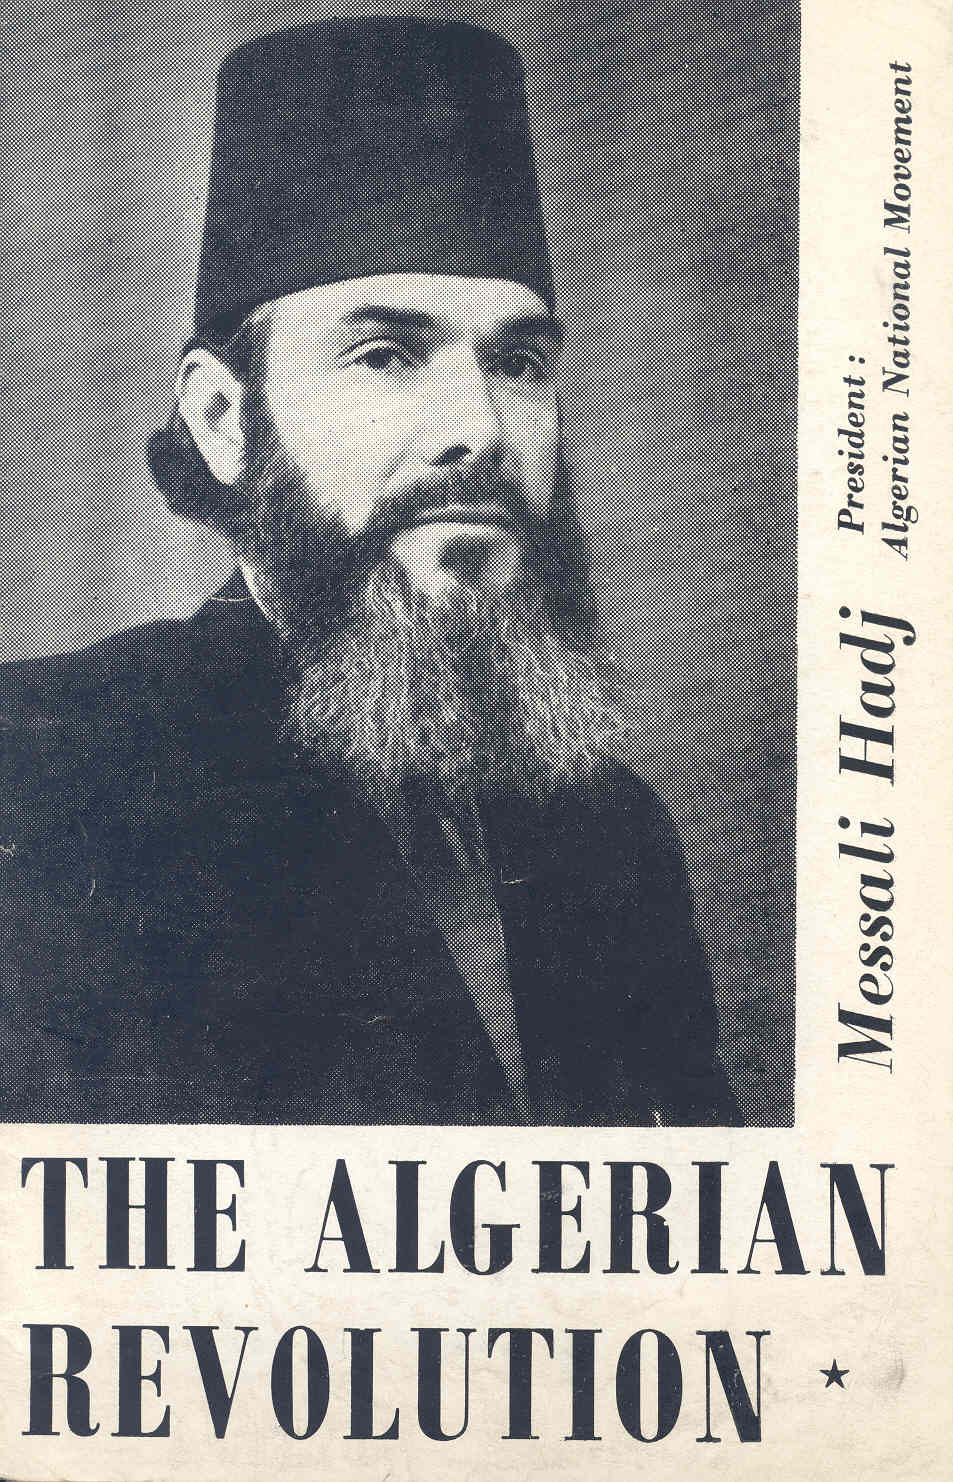 'The Algerian Revolution' by Messali Hadj, 1955